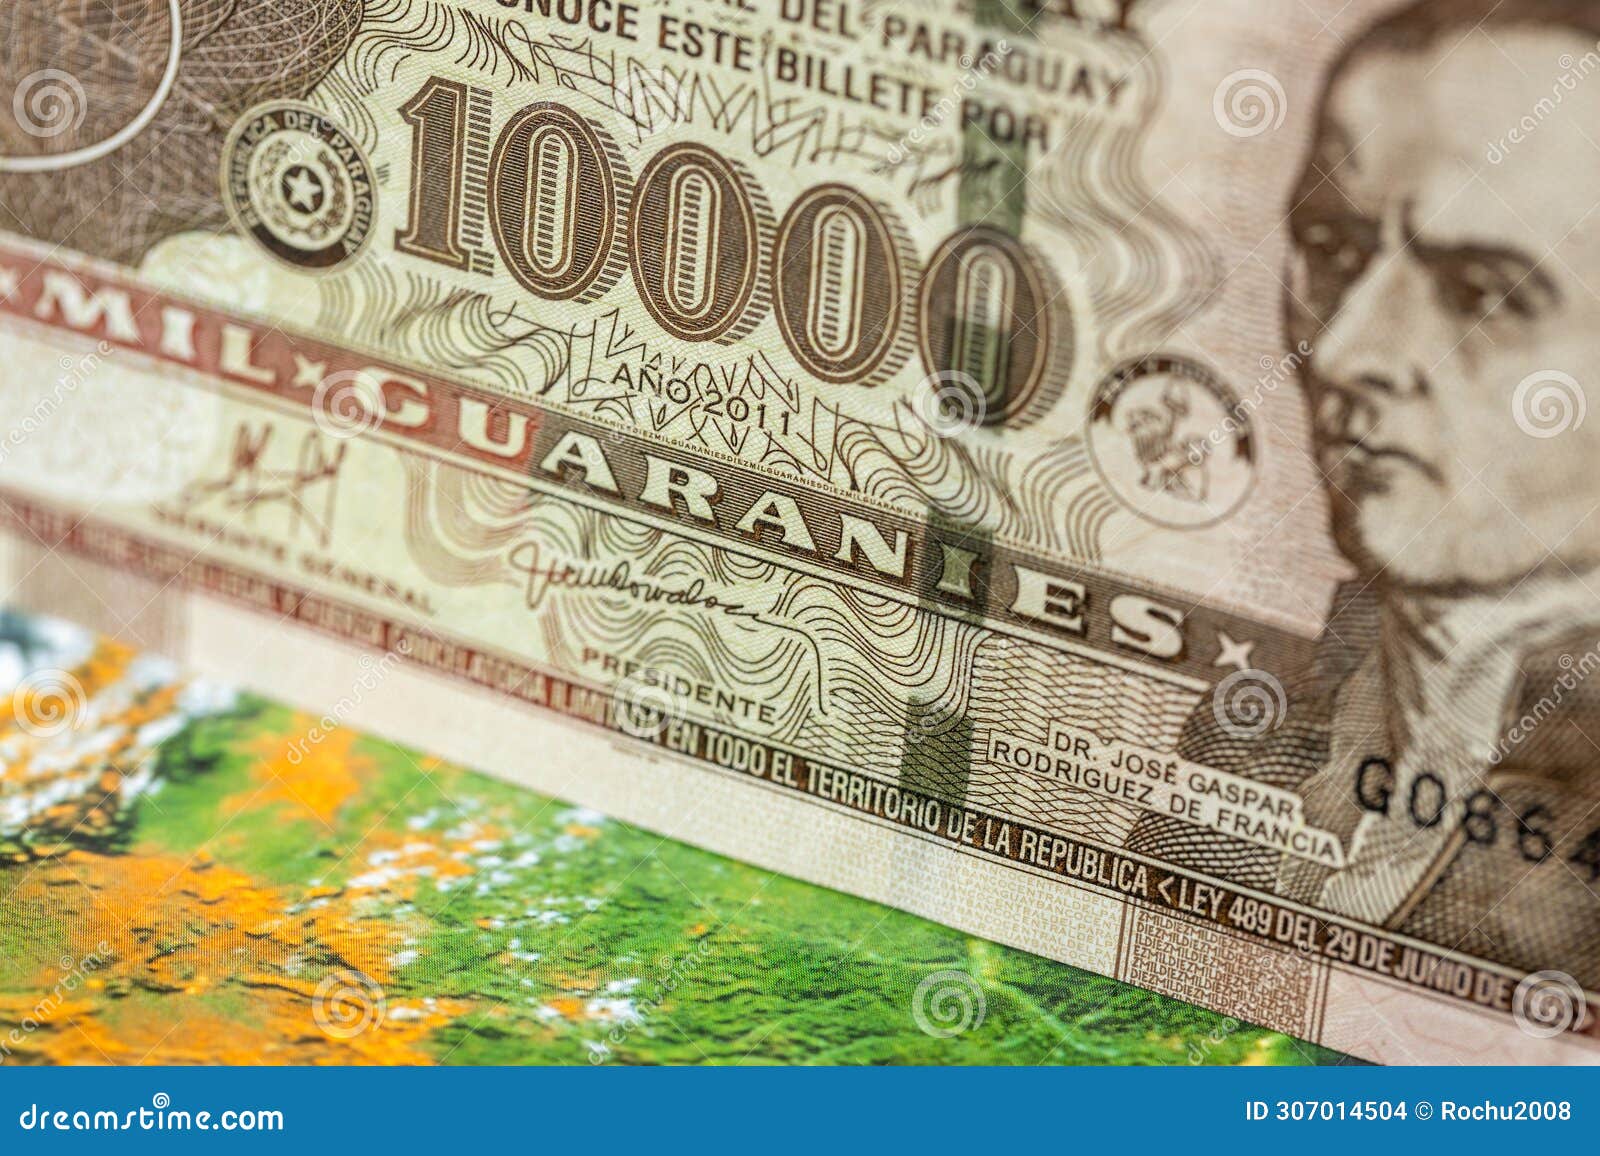 paraguay money, paraguayan currency, paraguayan guaranies exchange rate, financial concept